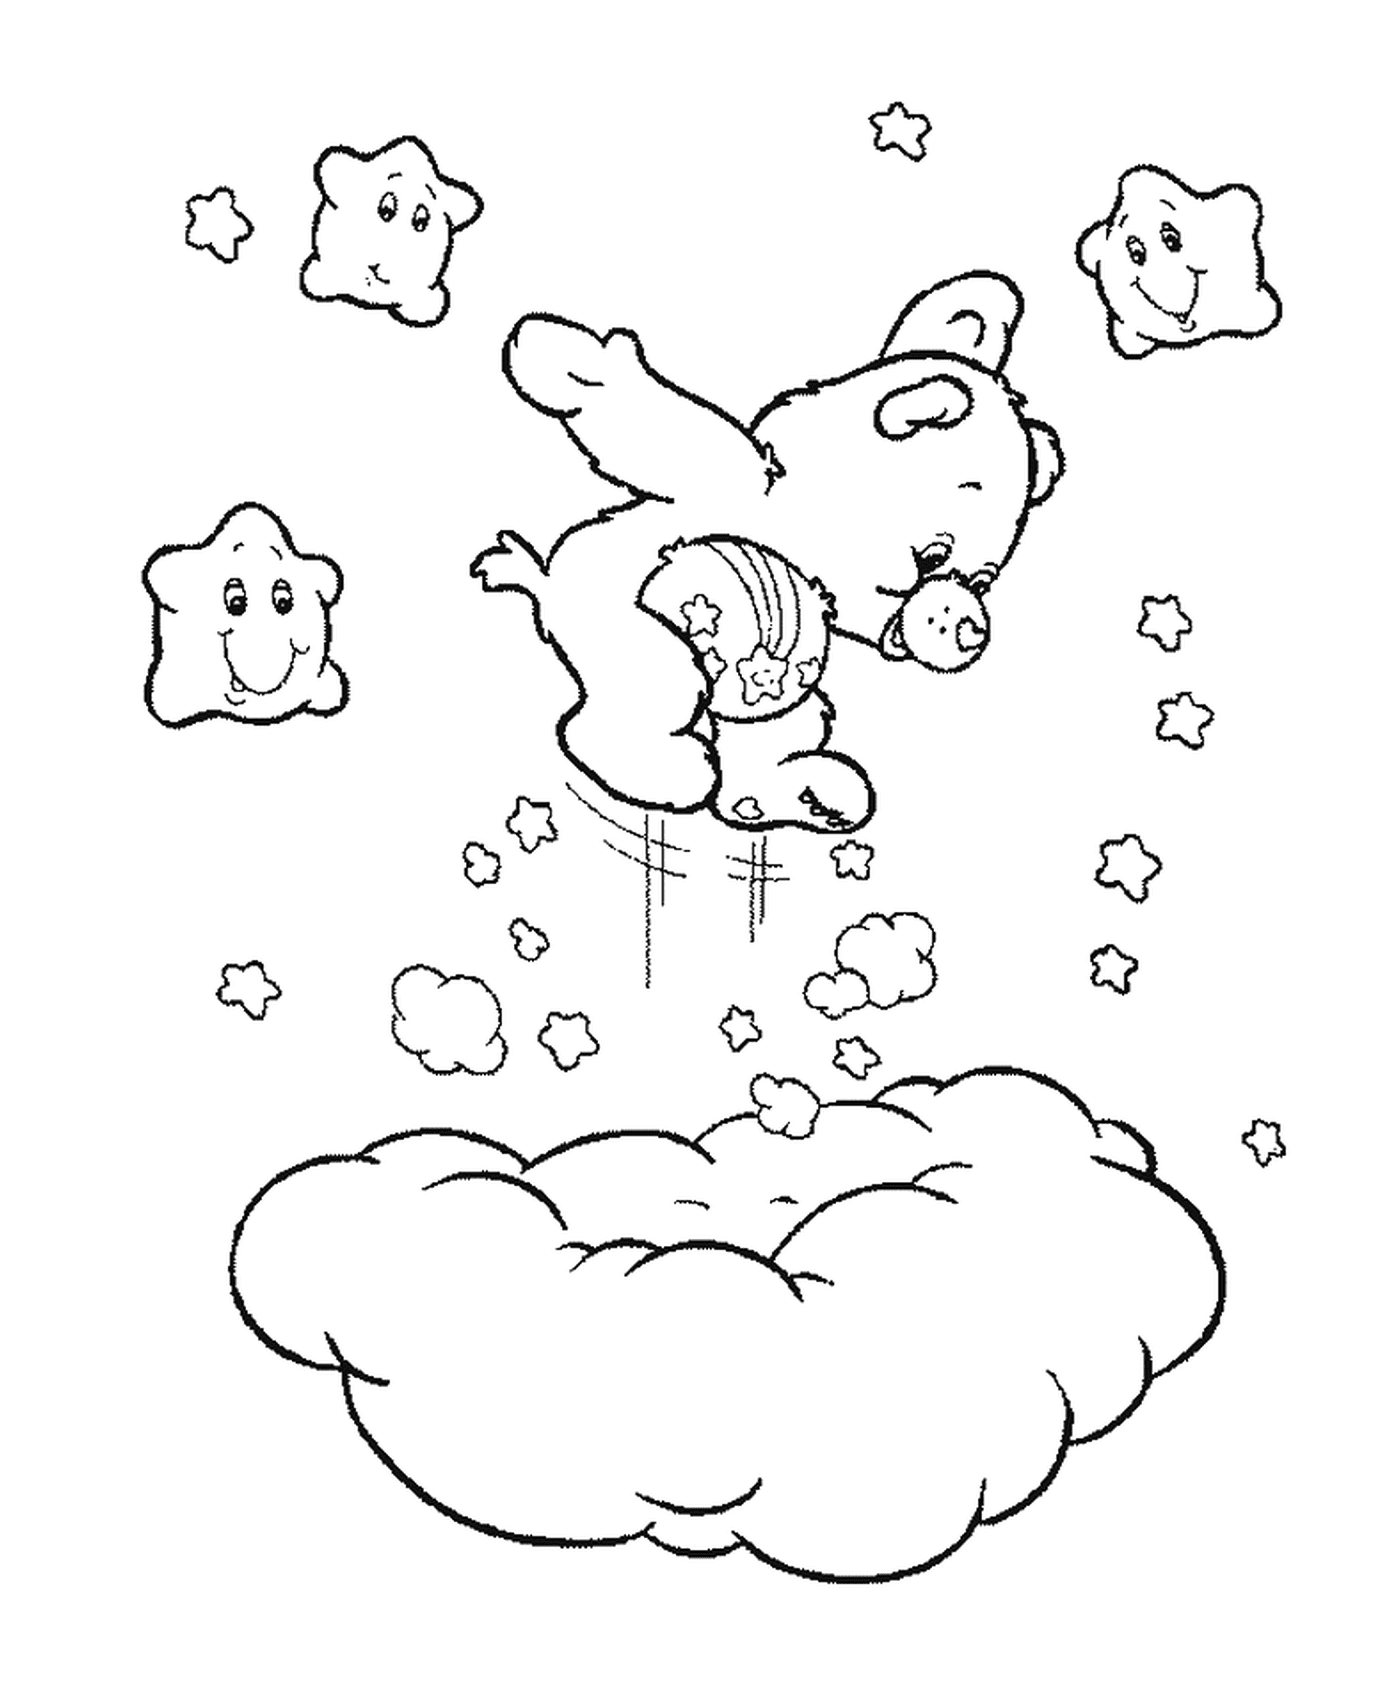  Un Bisounour salta sobre una nube 